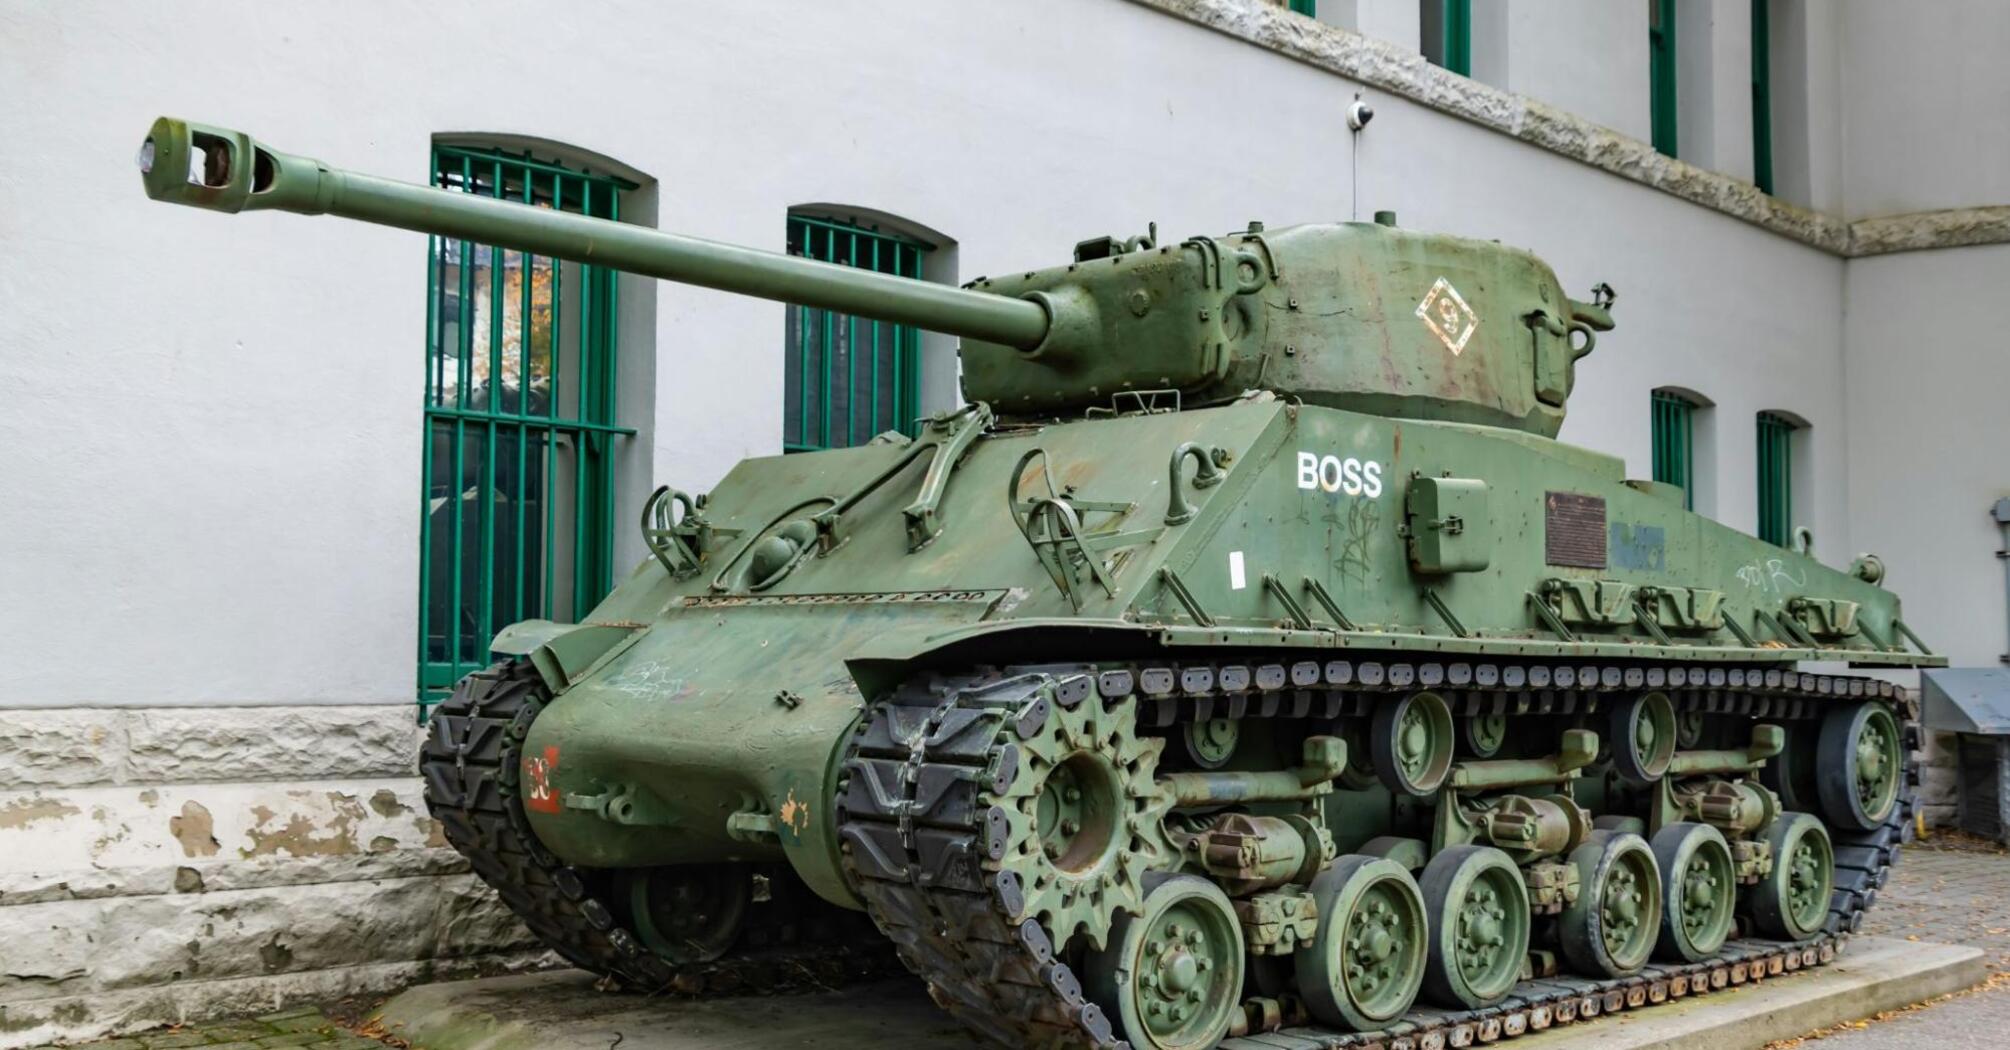 Sherman Tank display on the street